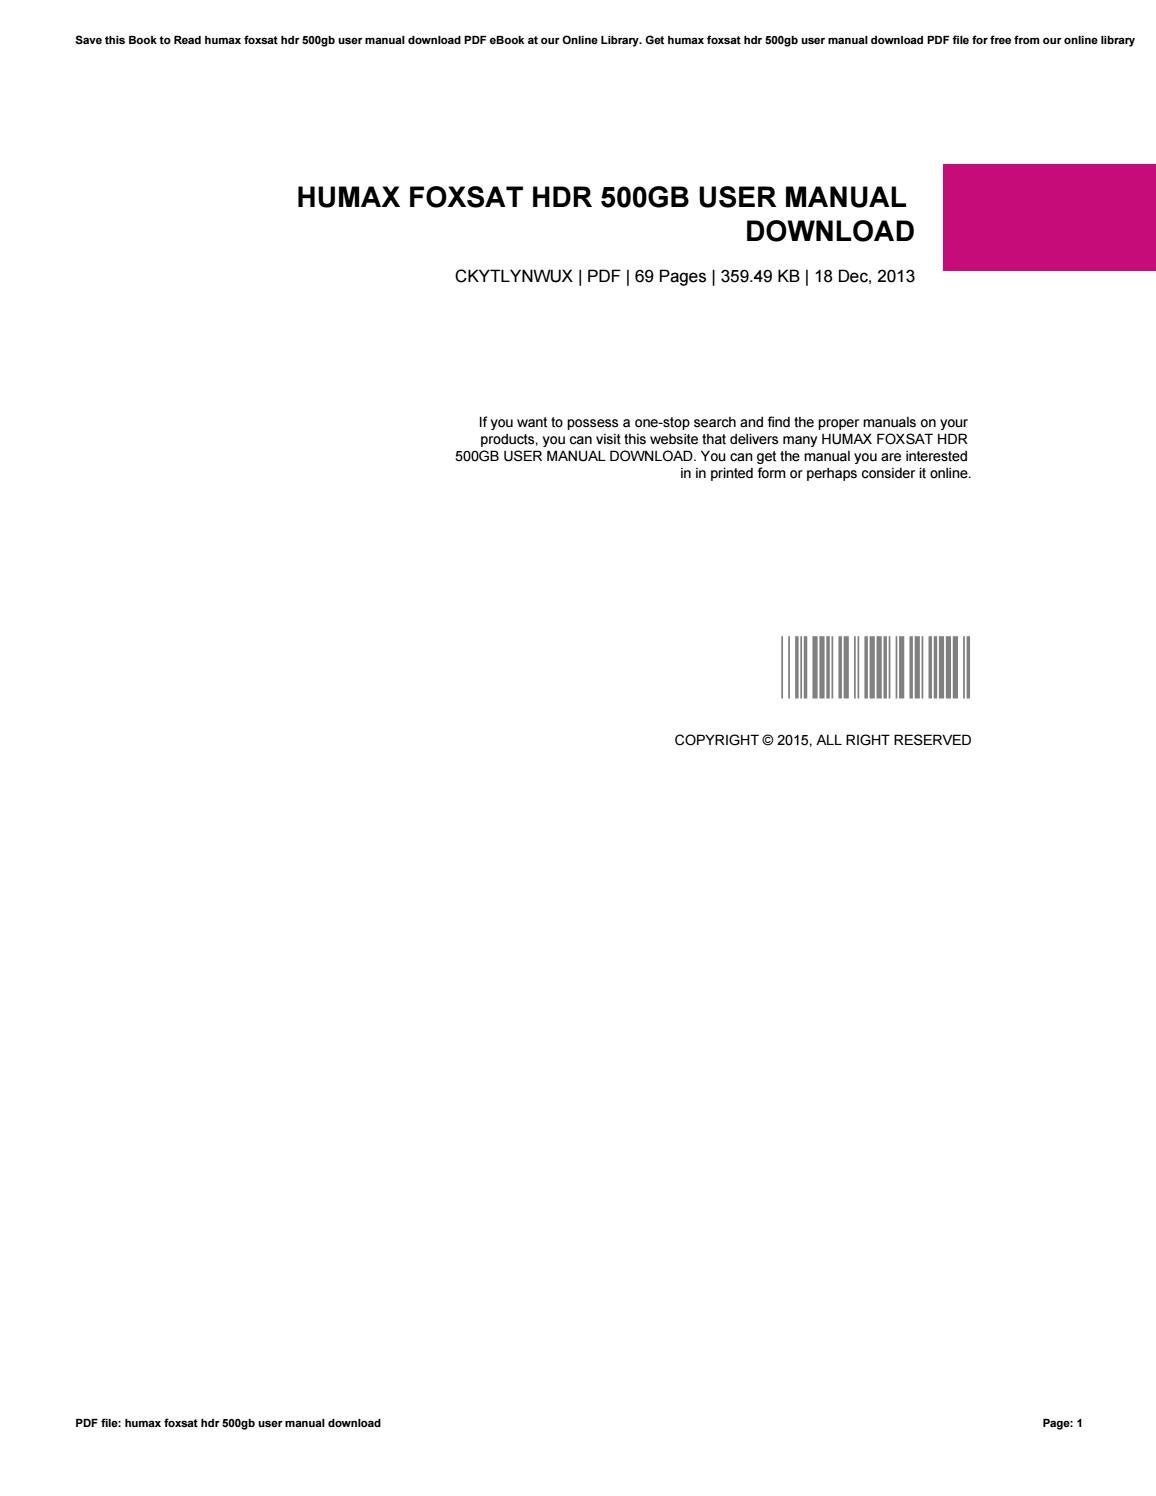 humax hdr 3000t operating manual download